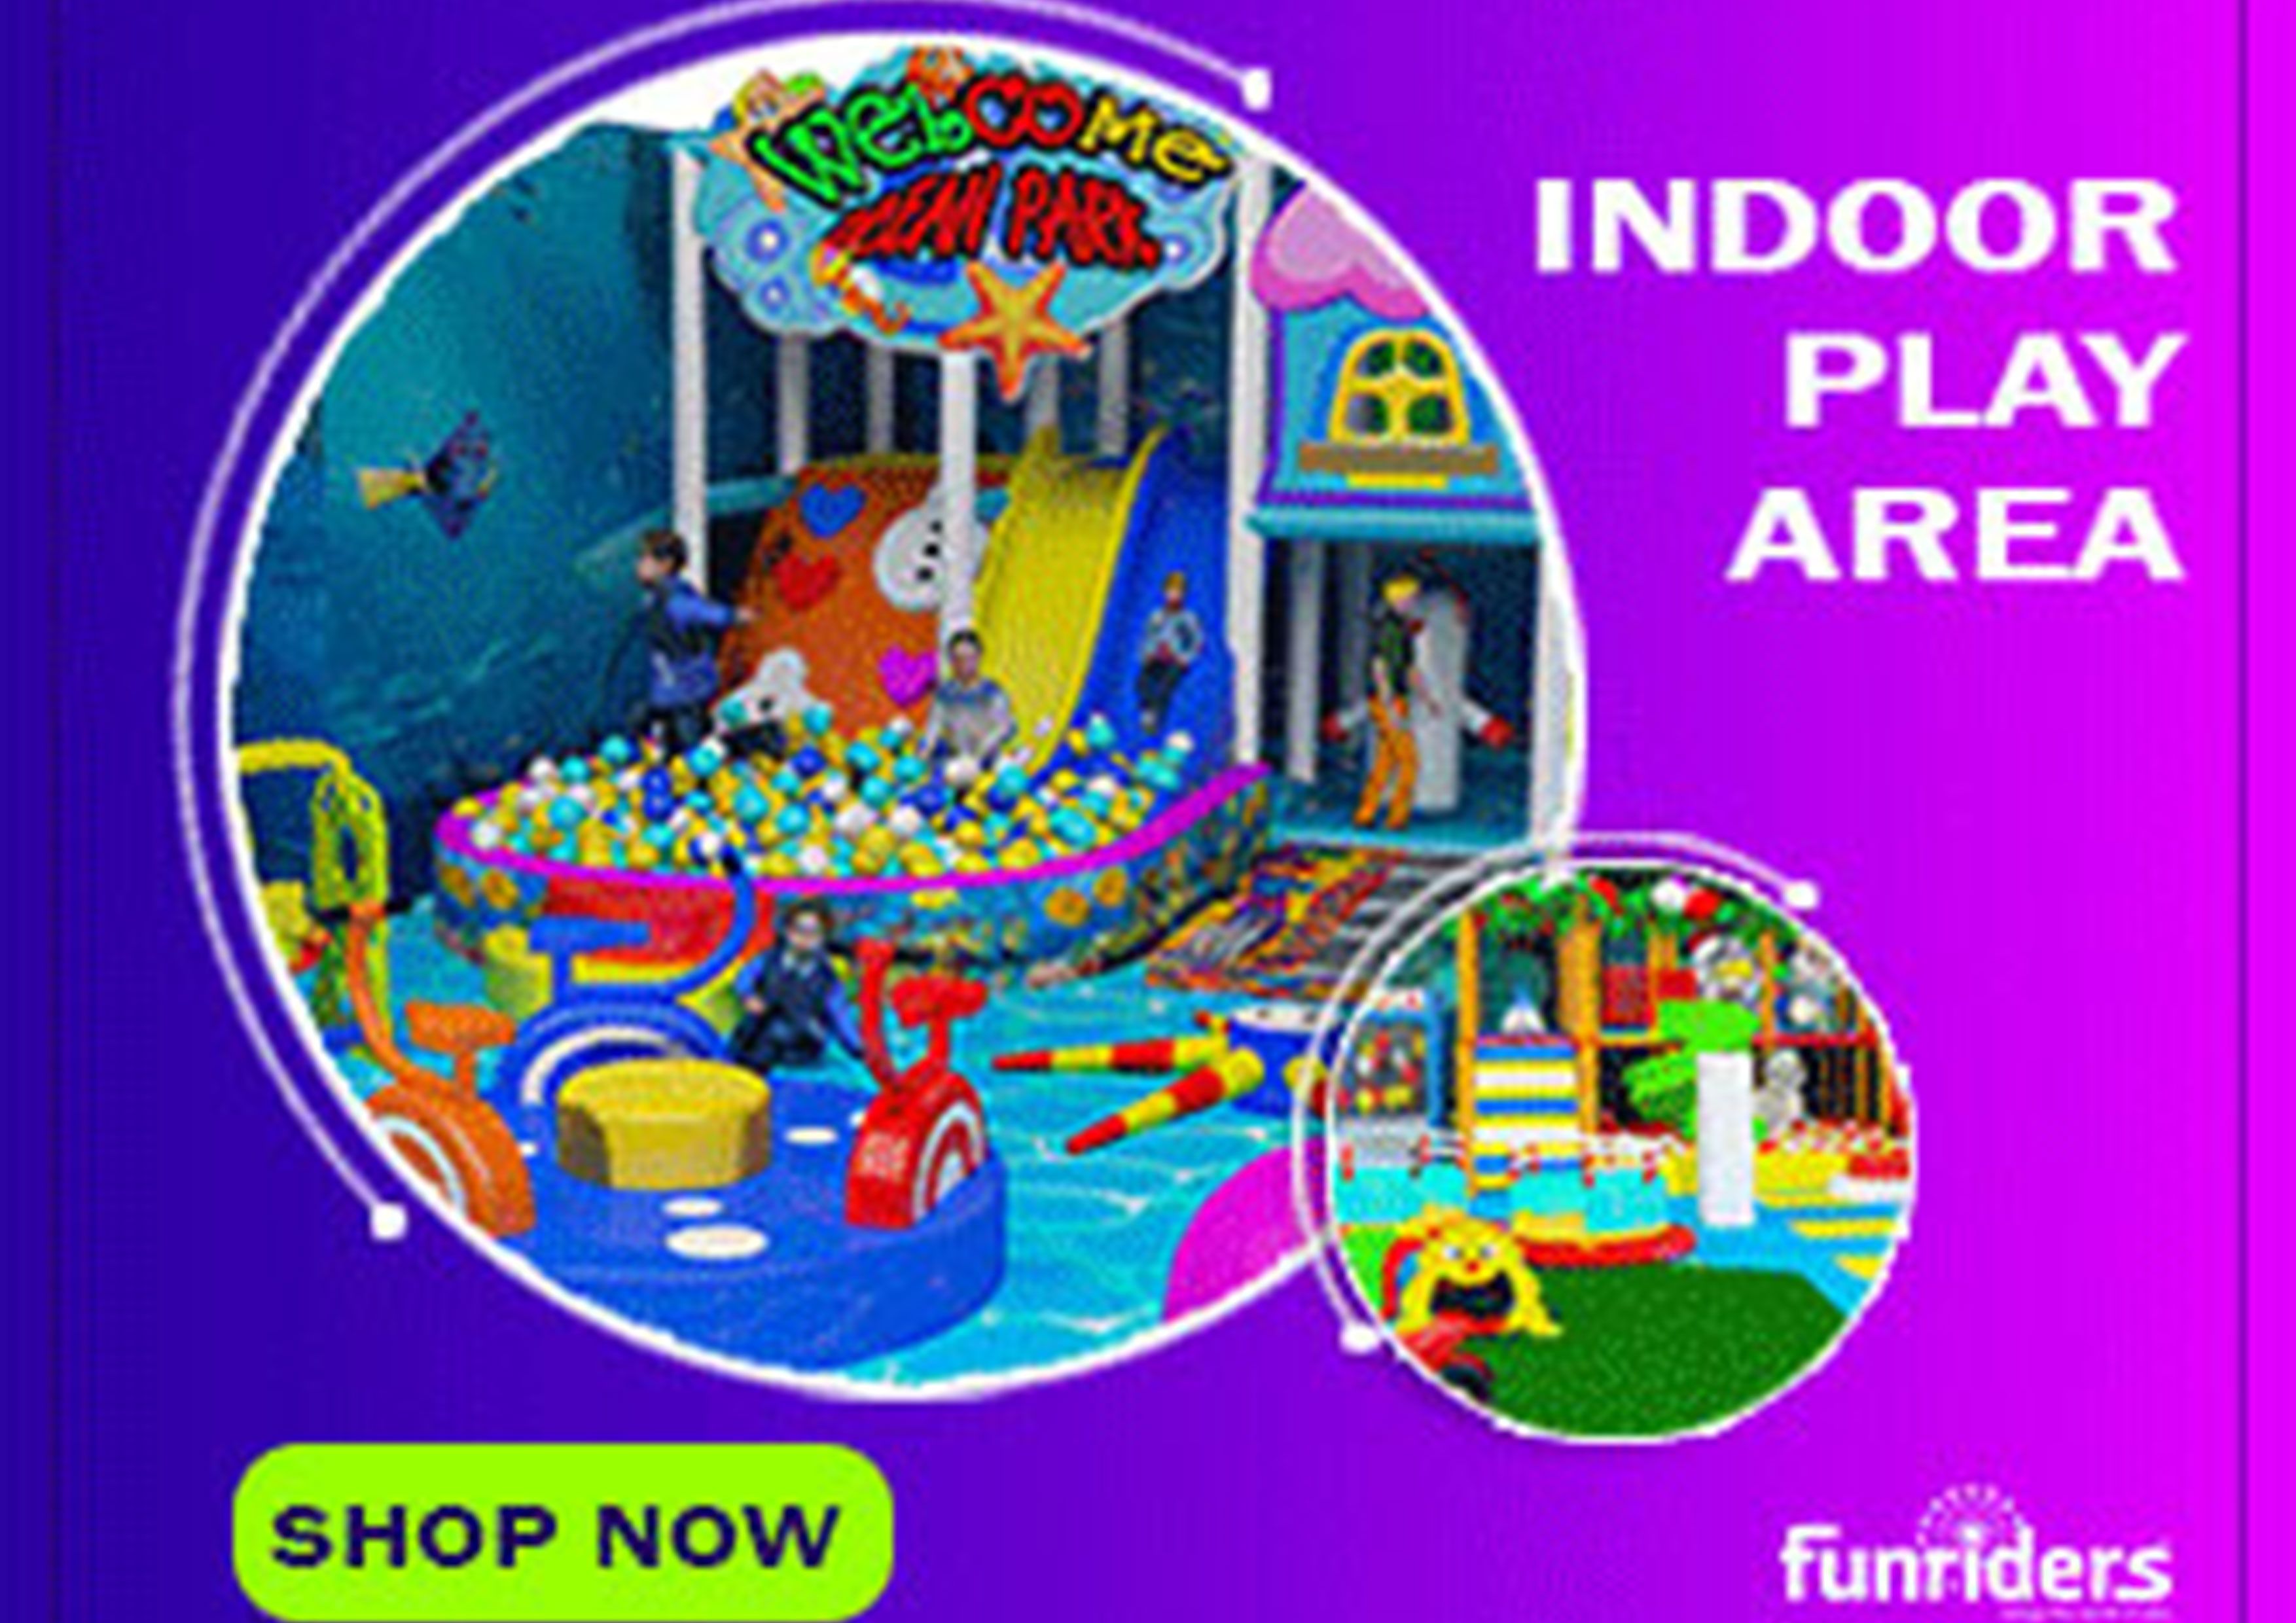 Indoor playground business.